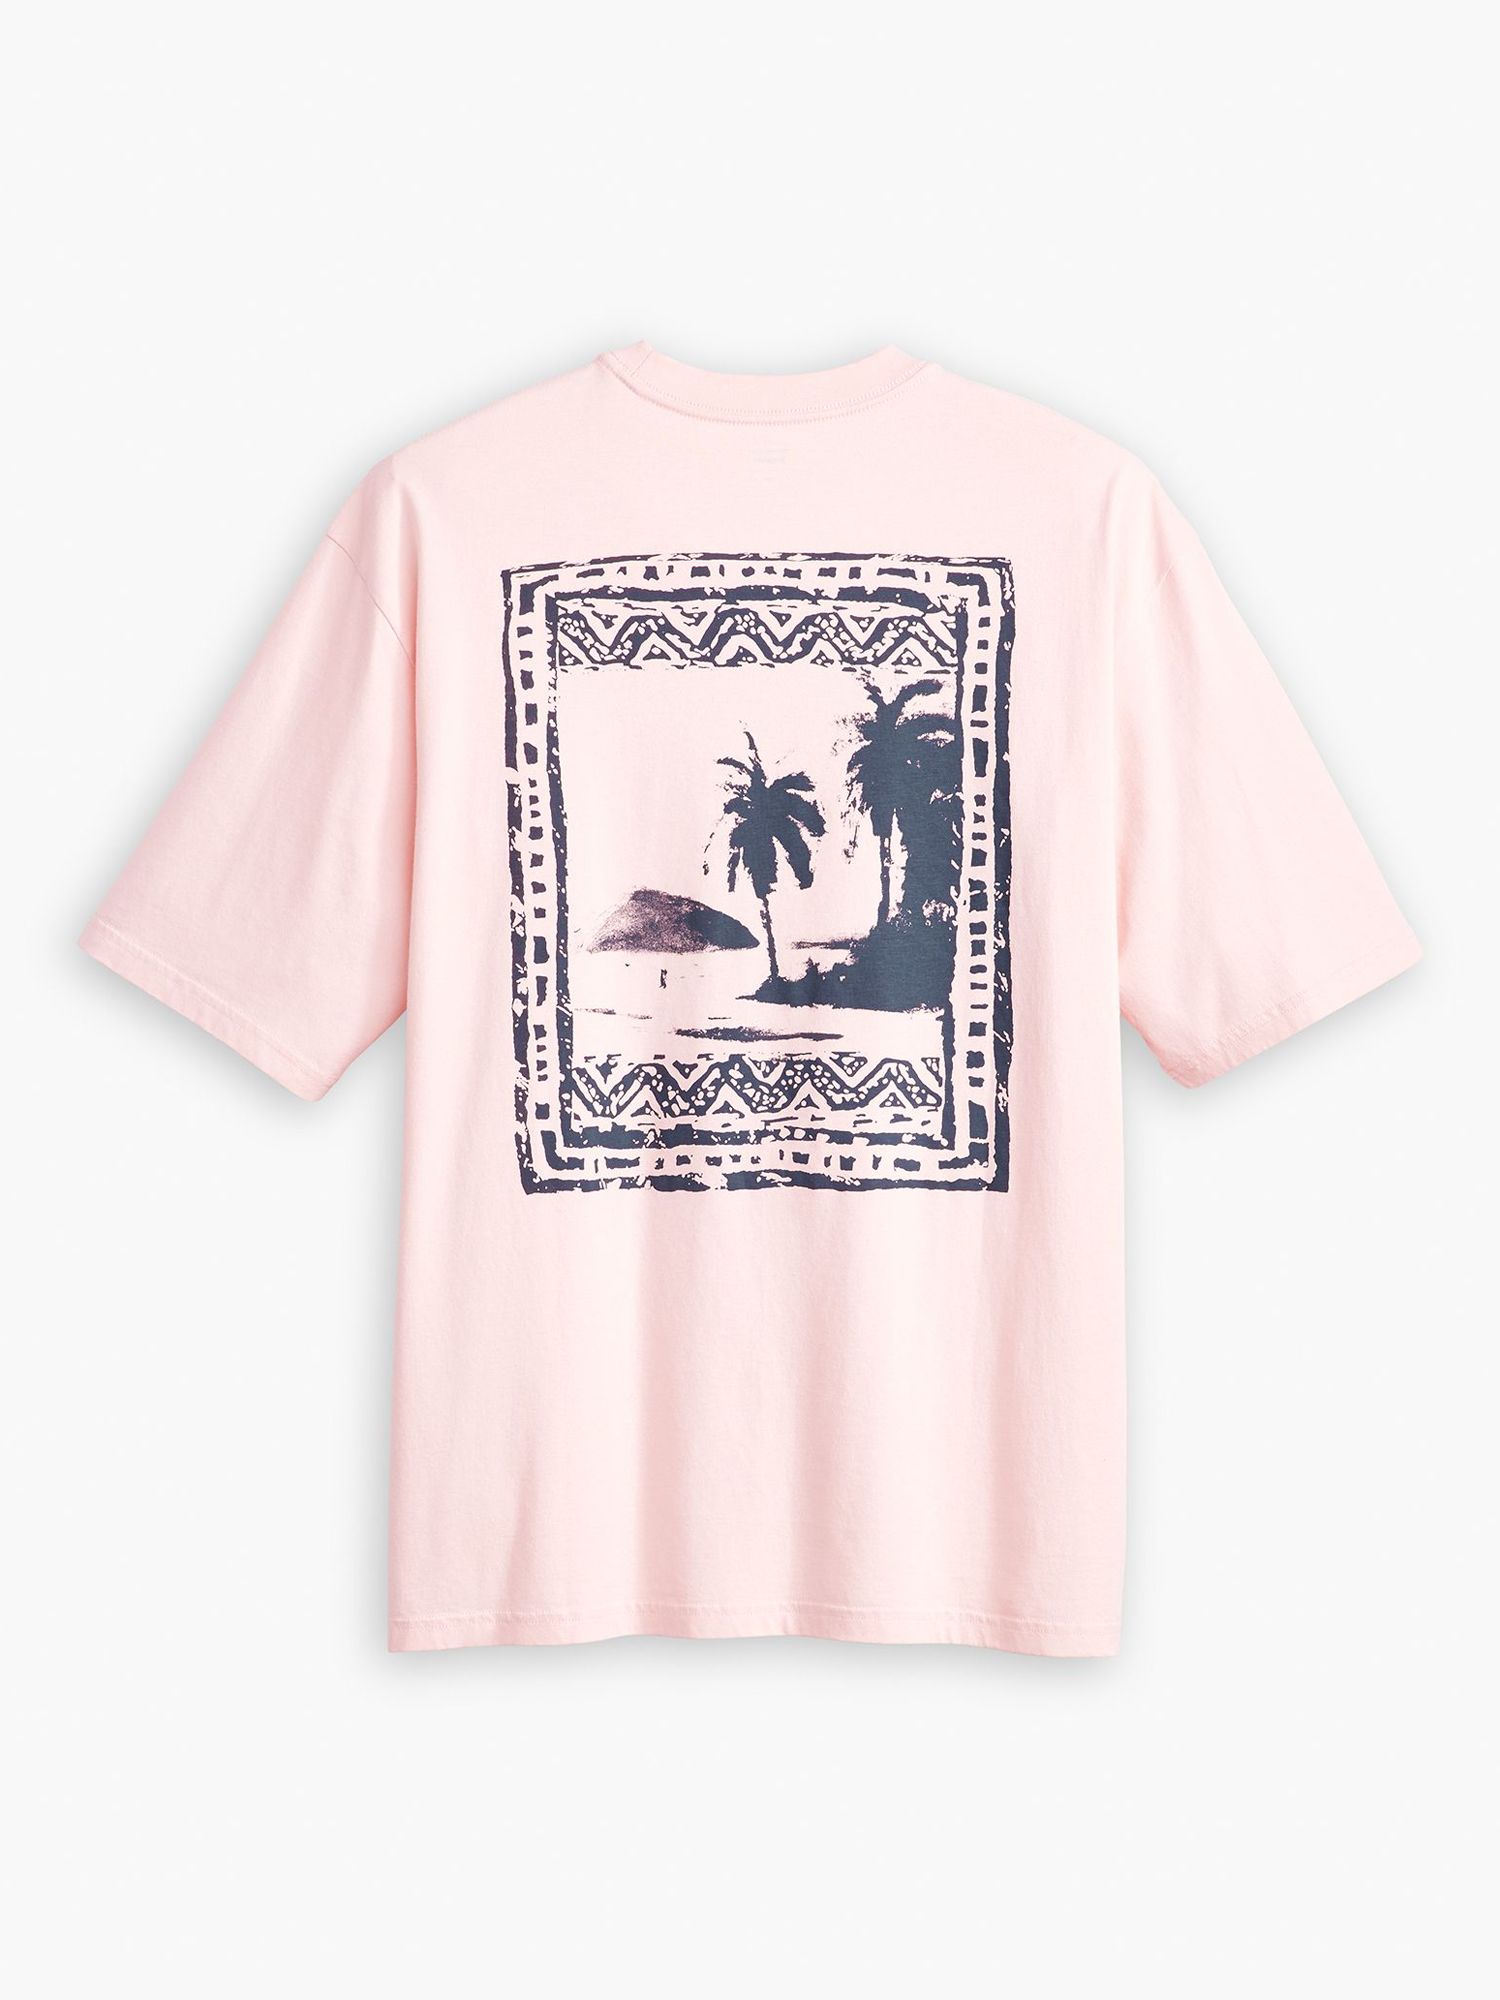 Levi's Graphic Palm Back Print Half Sleeve T-Shirt, Pink, S